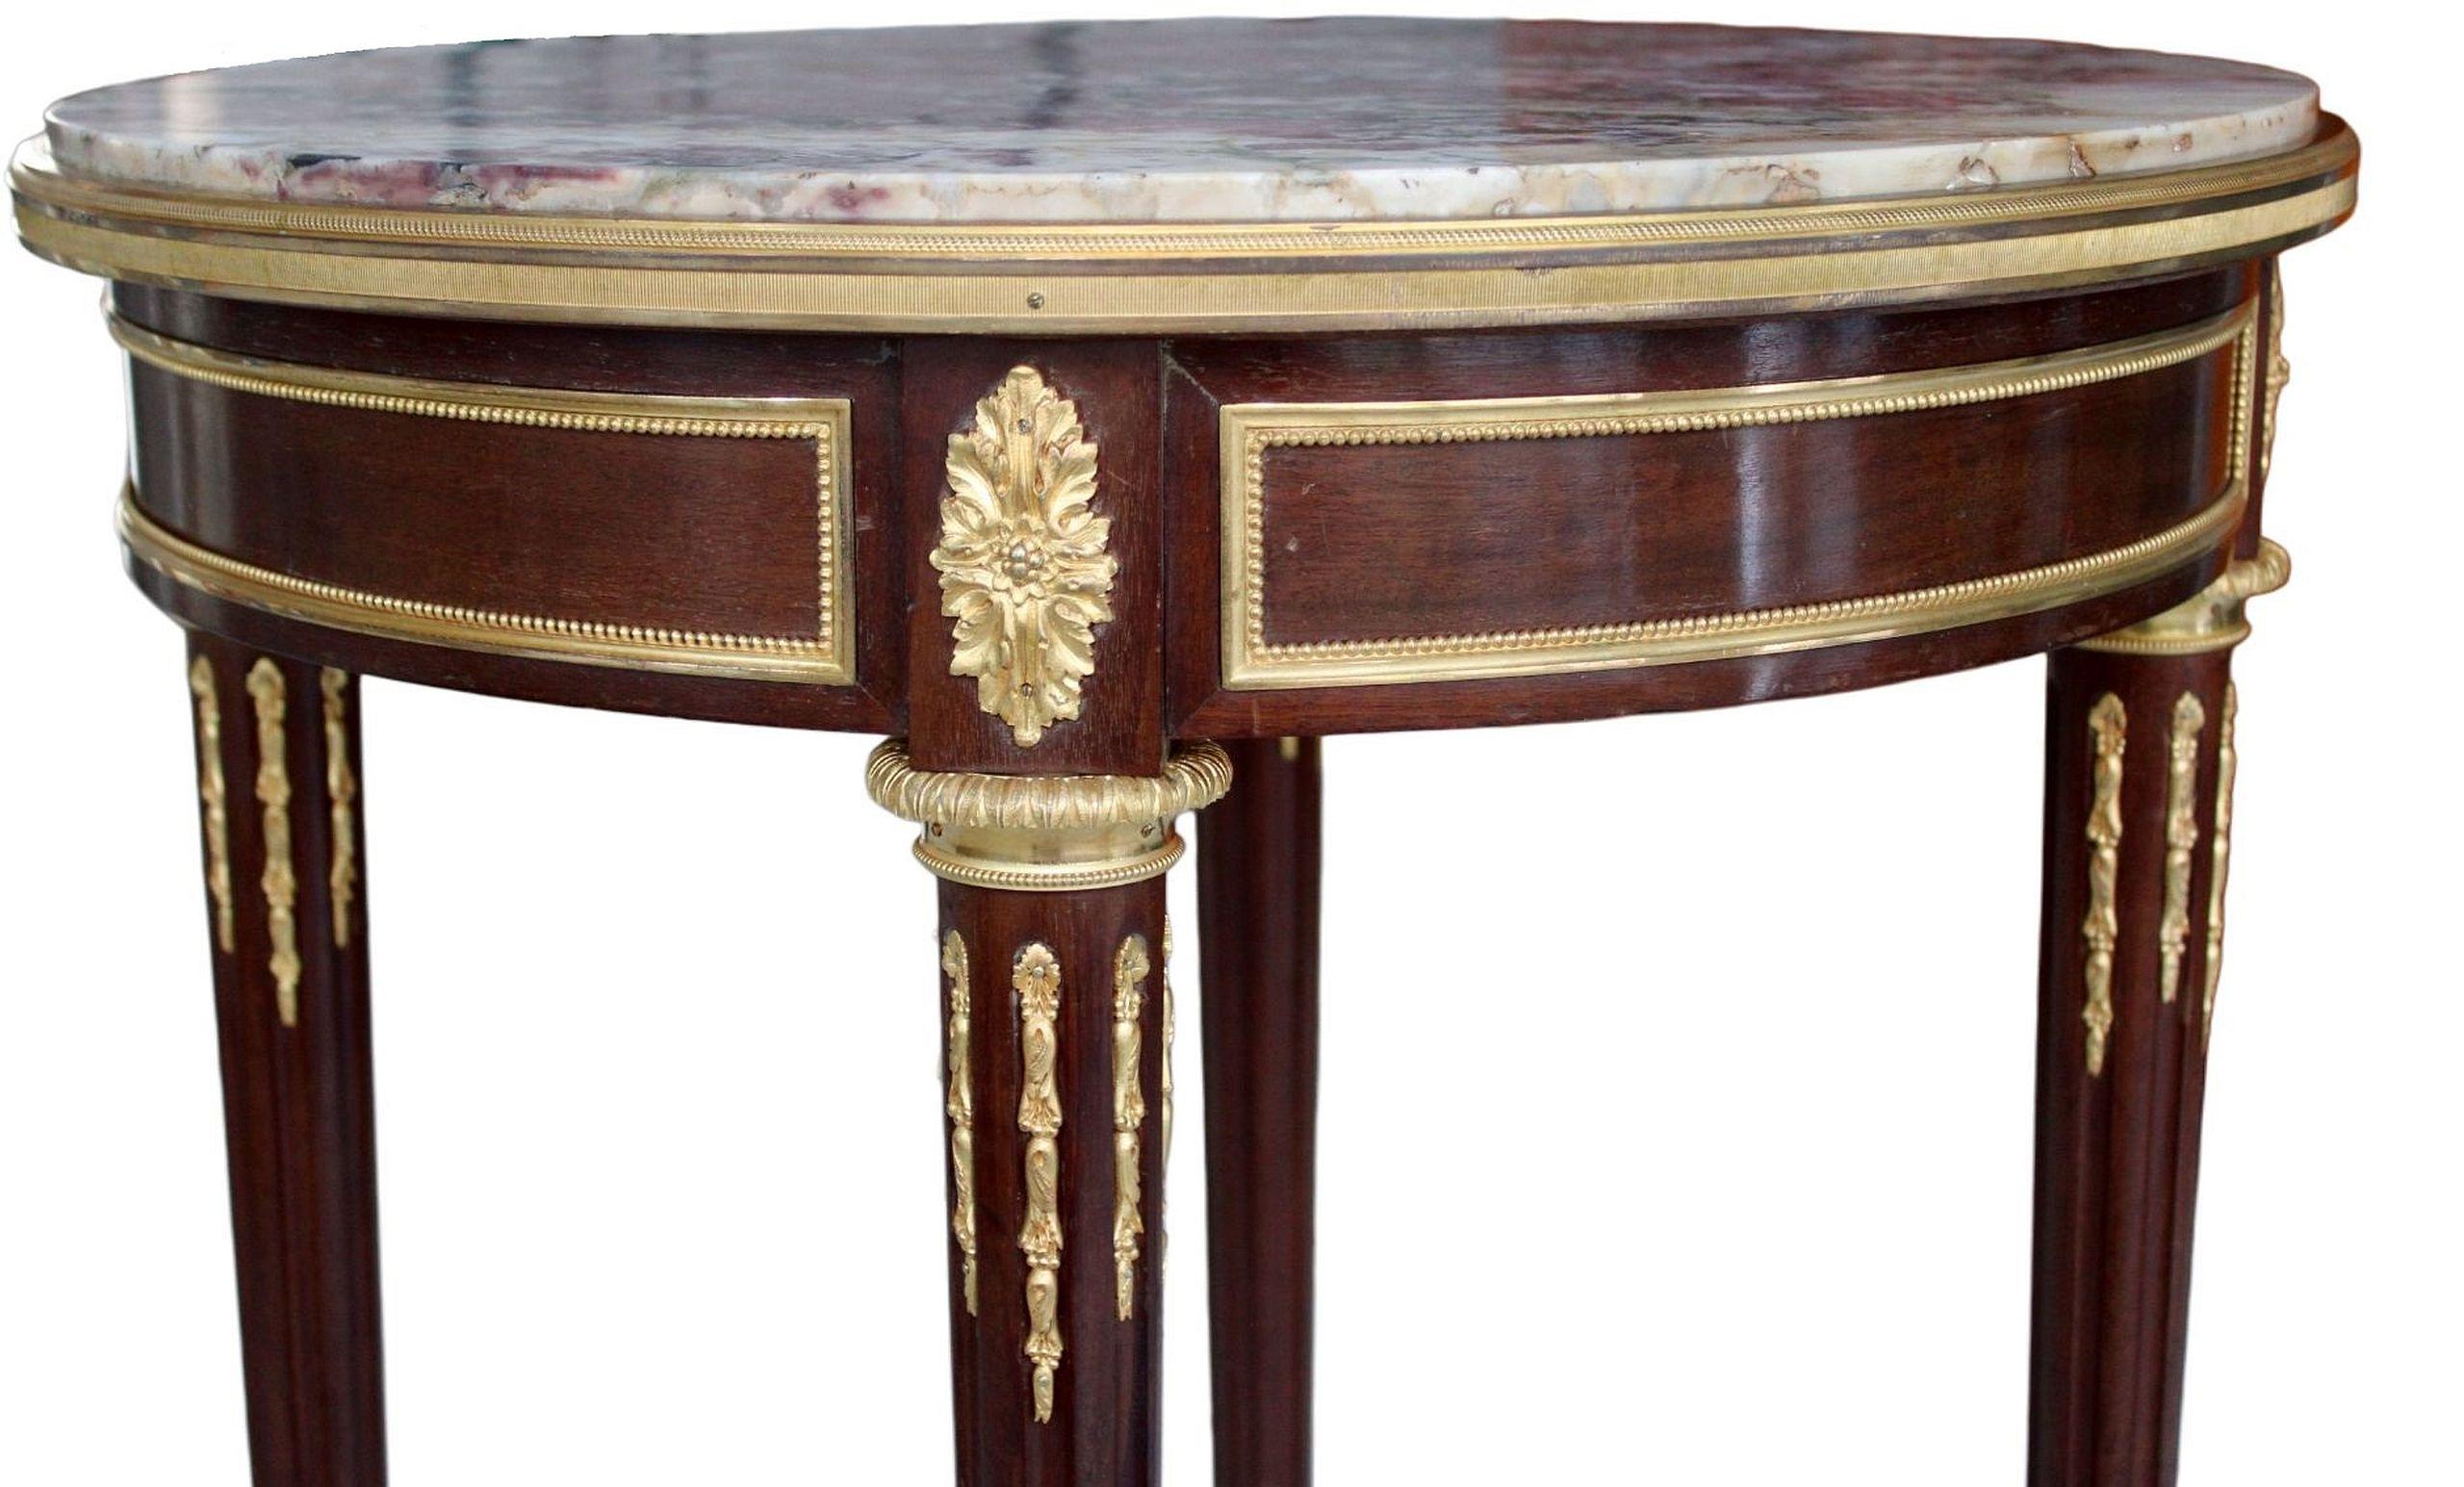 Francis Linke - Table, oak, mahogany, marble, gilded bronze, h 75.5 cm; d 59 cm For Sale 1